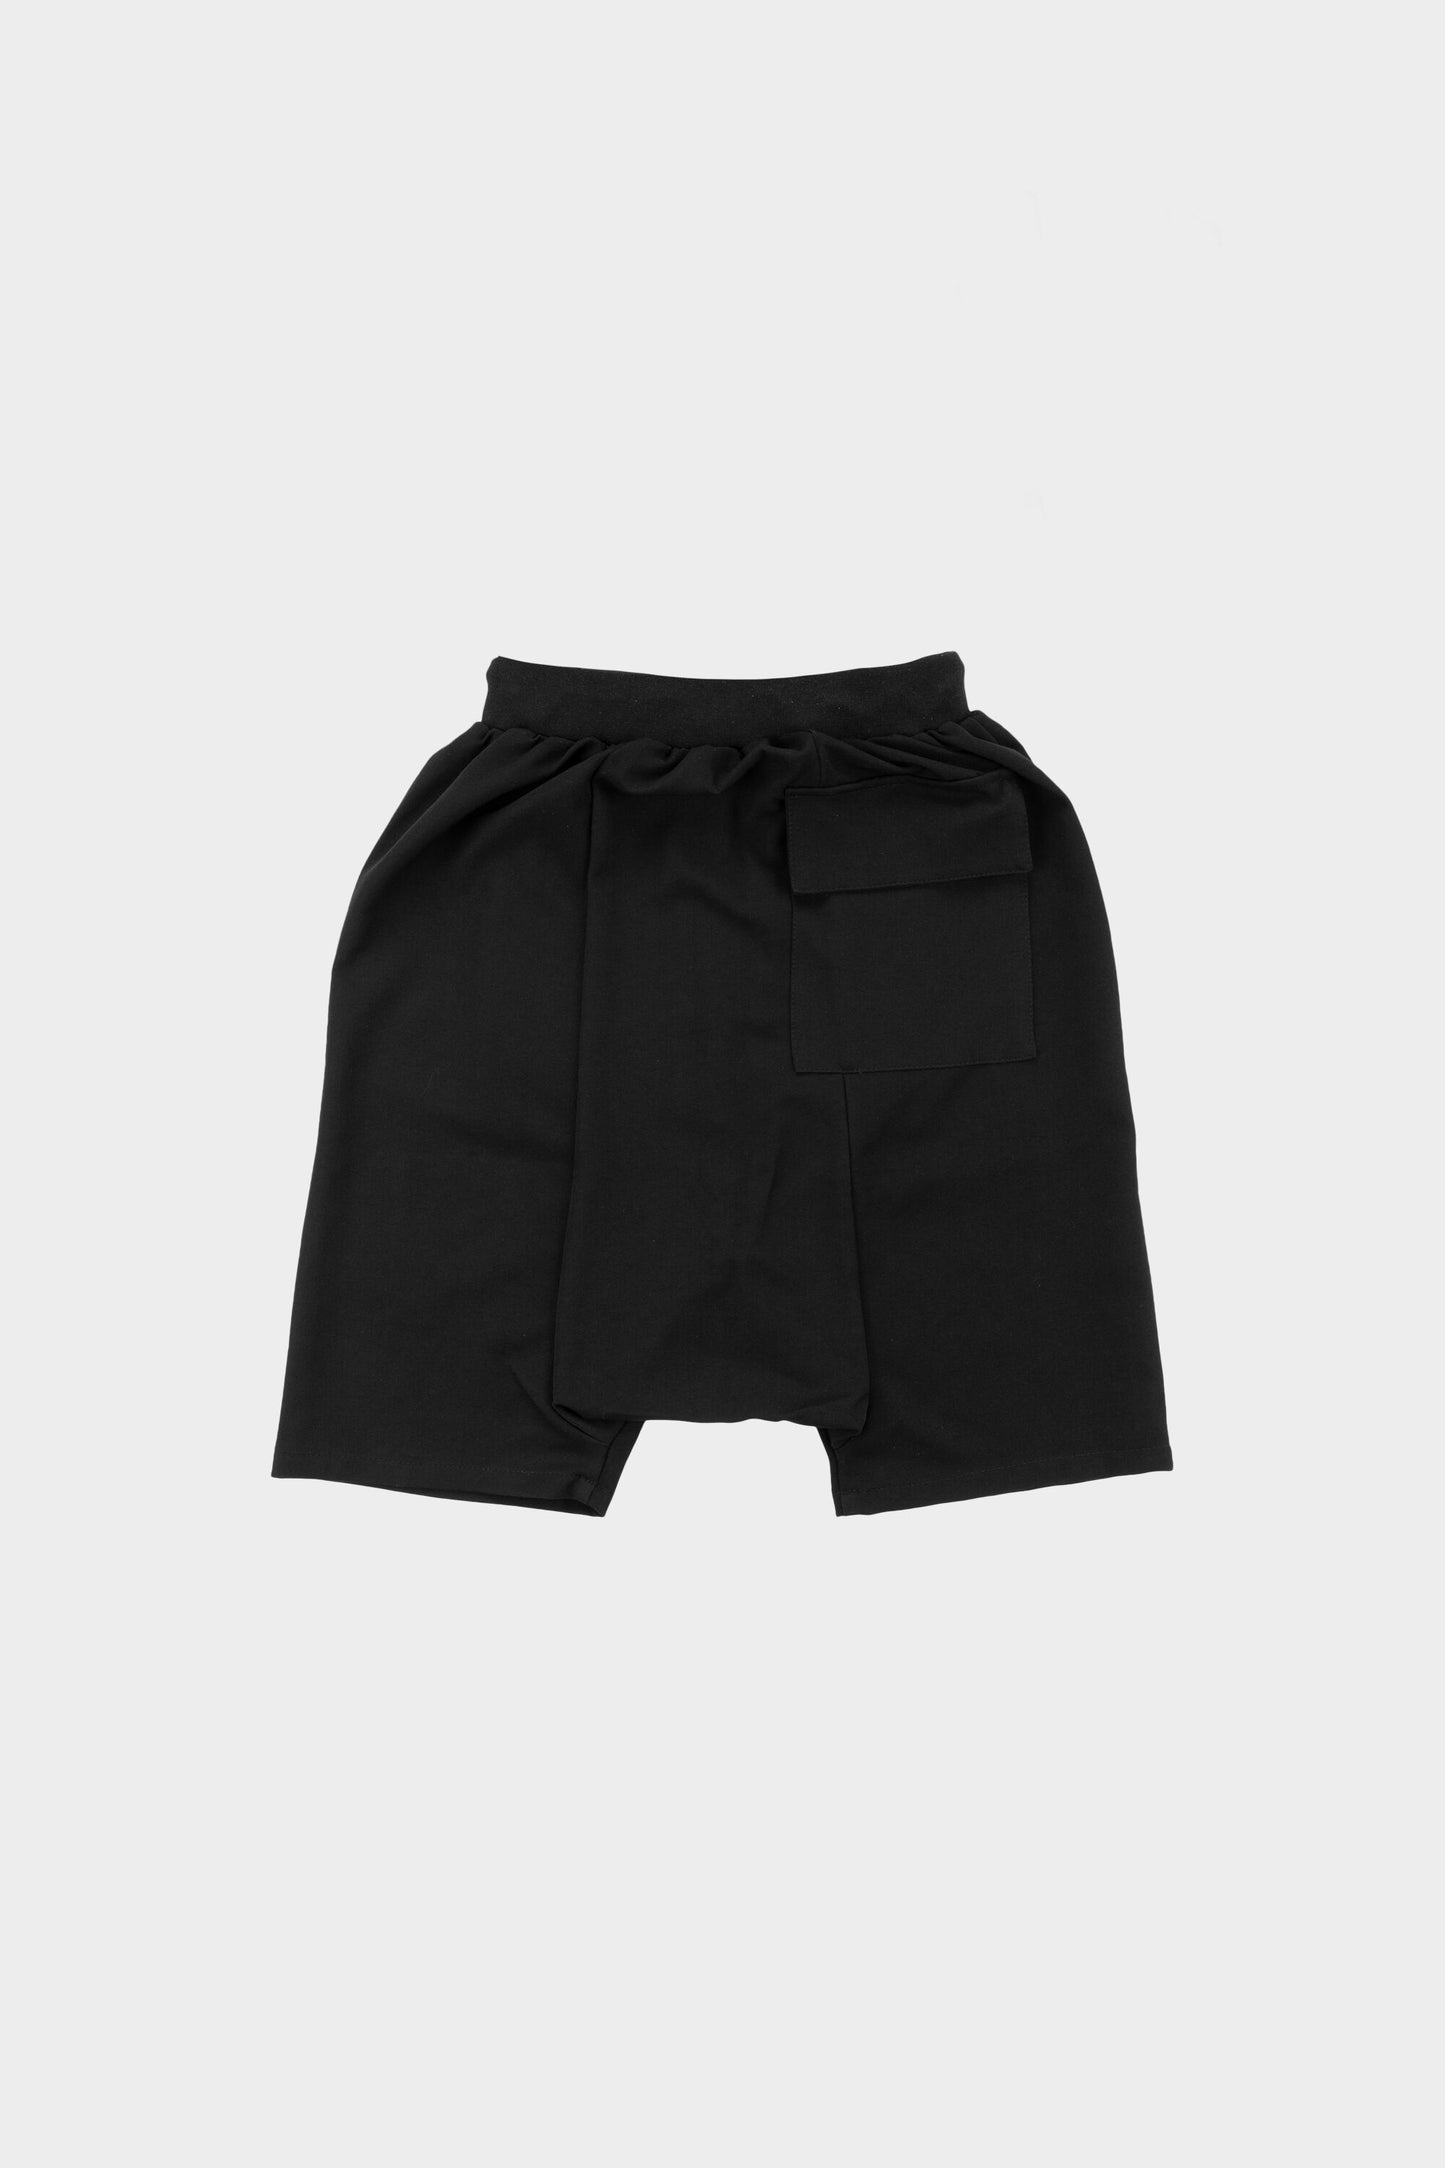 Low Crotch Shorts Black